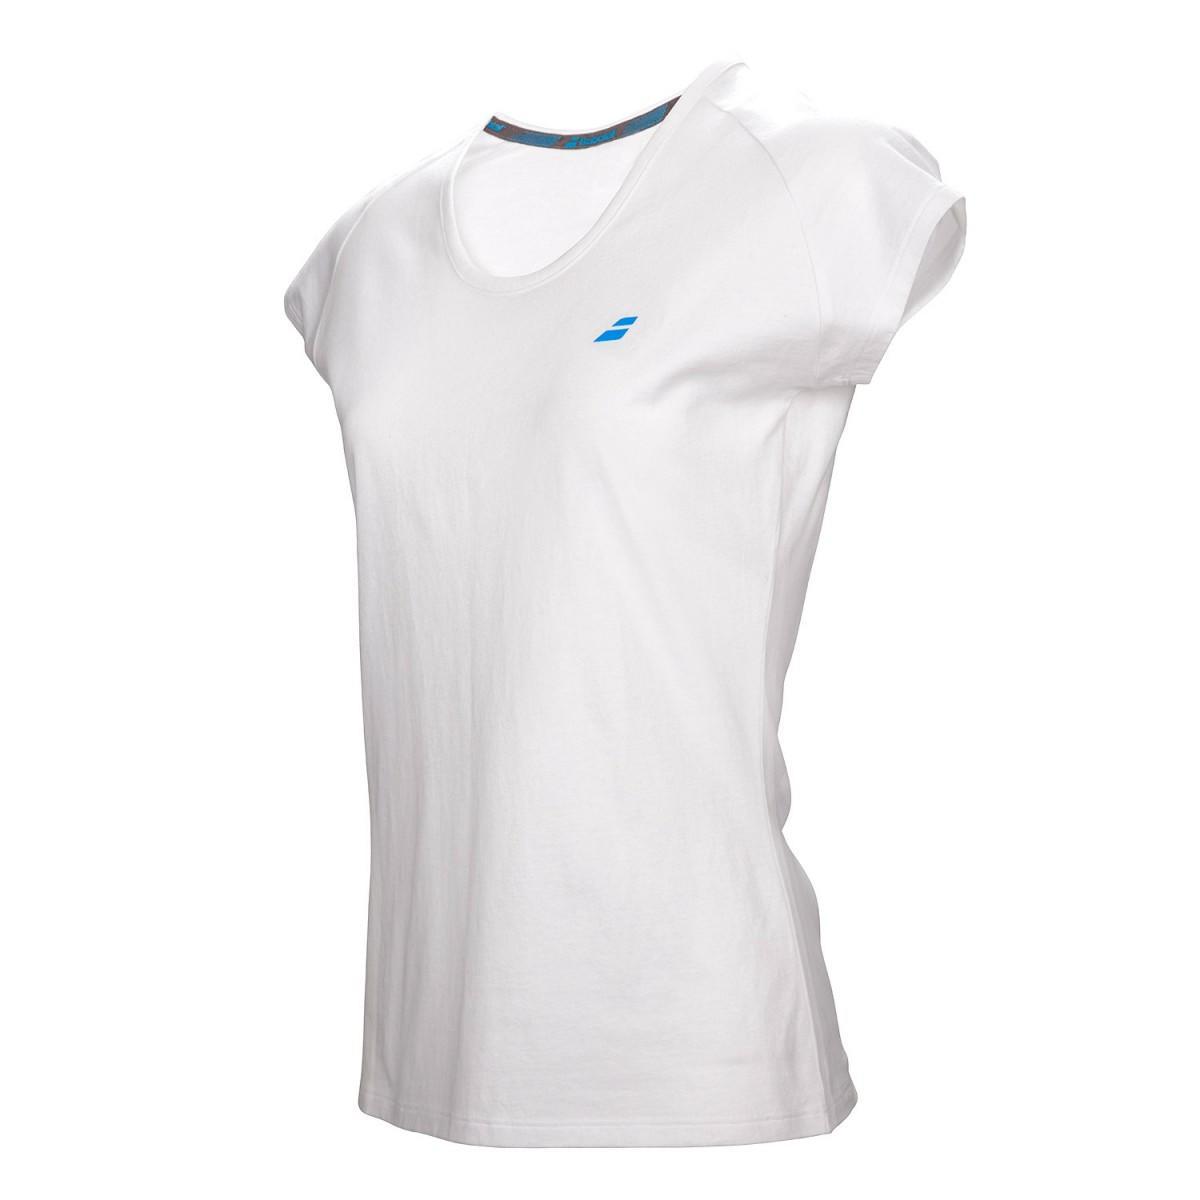 Теннисная футболка детская Babolat Core Tee Girl white